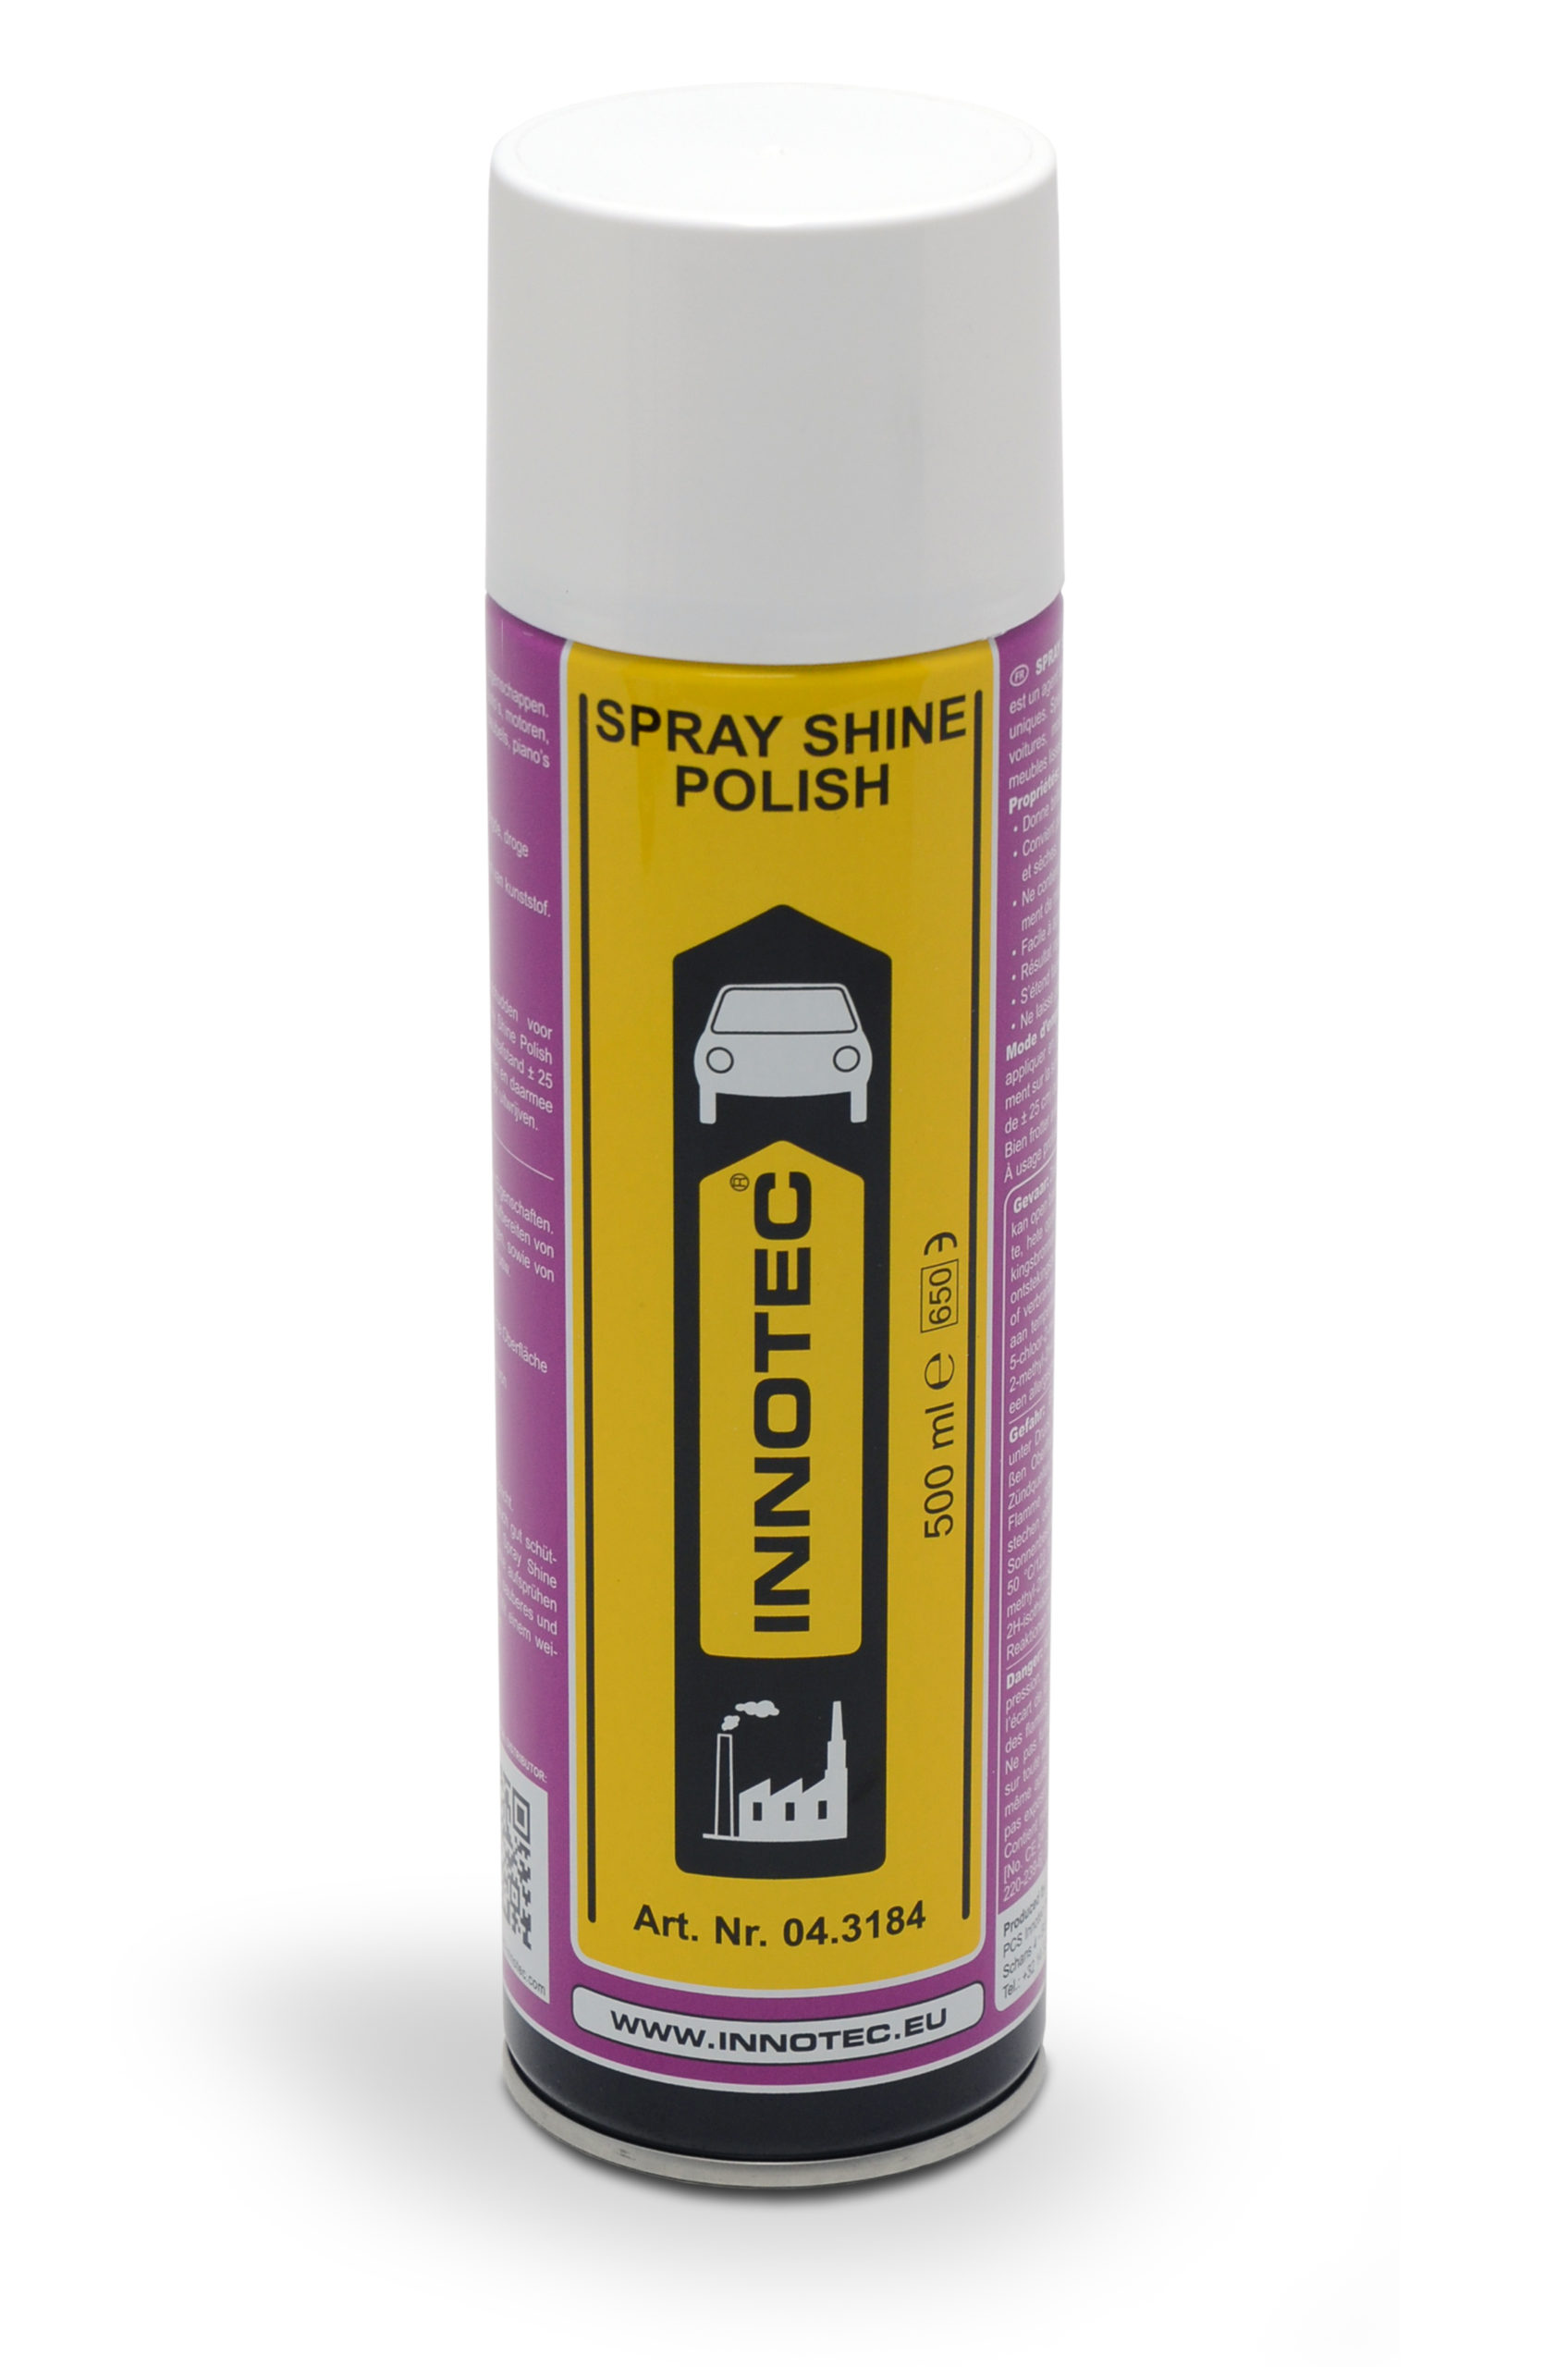 Spray Shine Polish – Innotec Deutschland